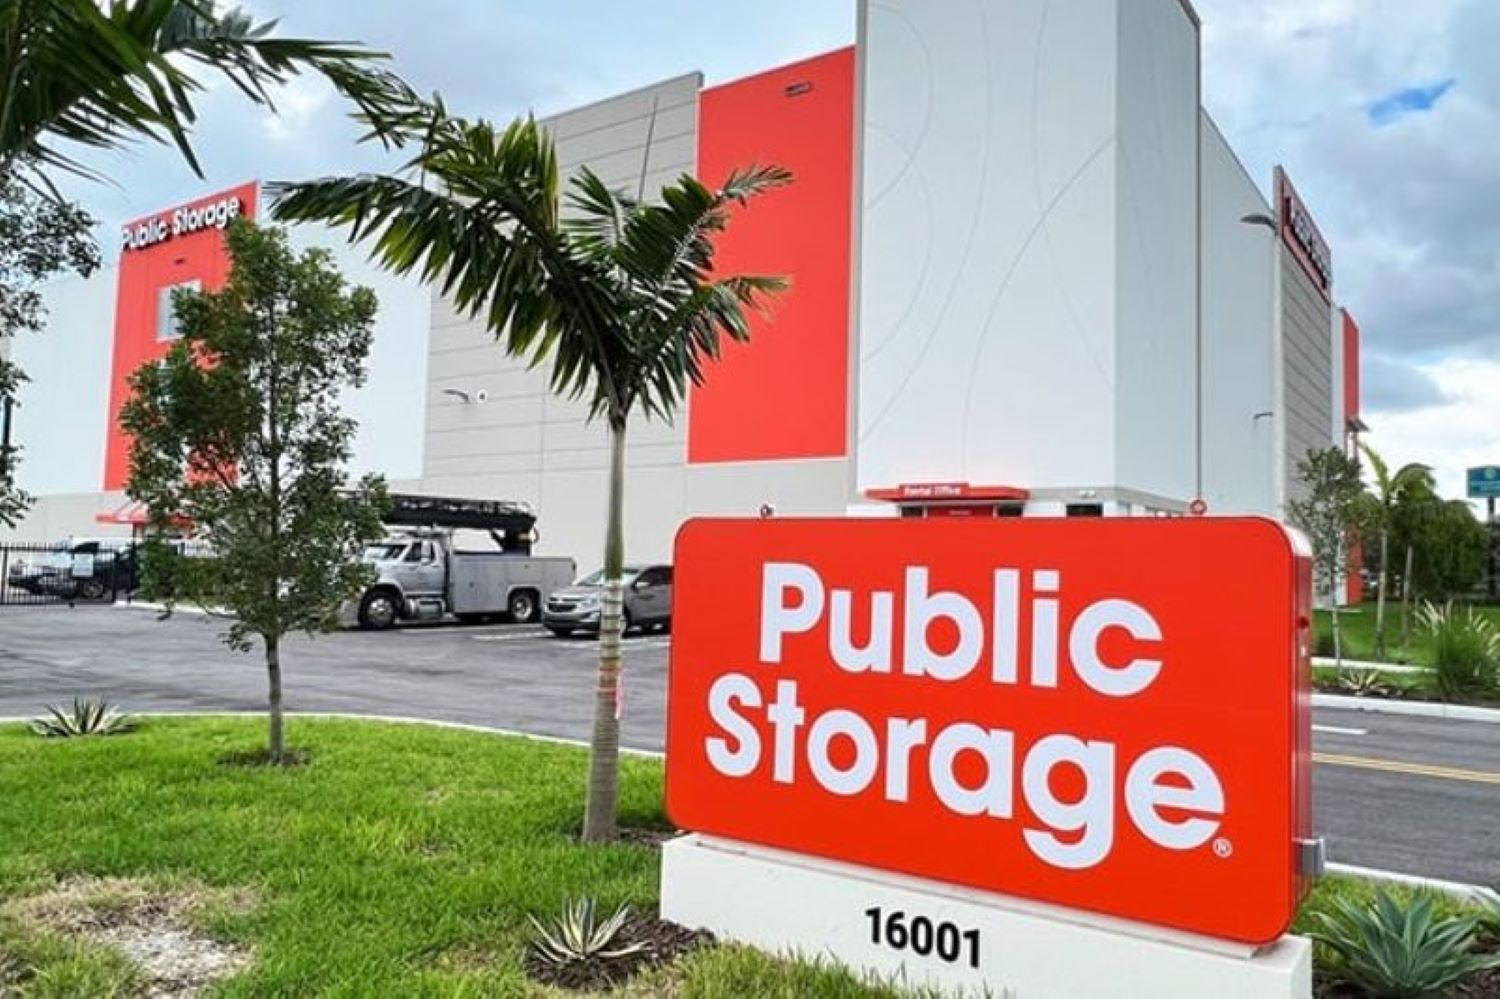 public storage